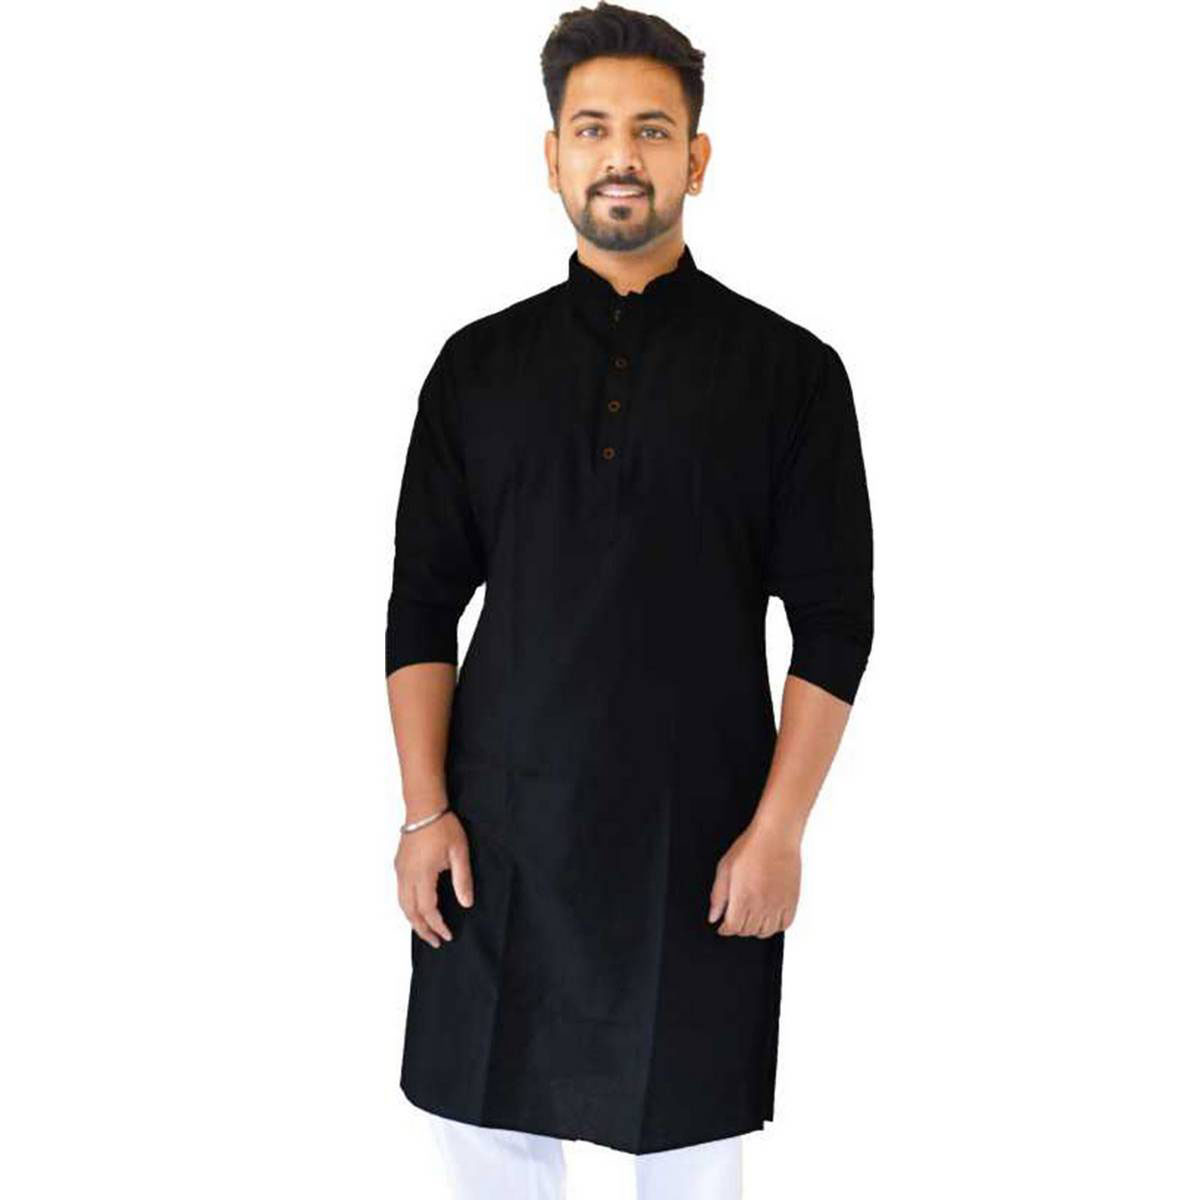 Black Punjabi Design - Colorful Punjabi Designs - NeotericIT.com